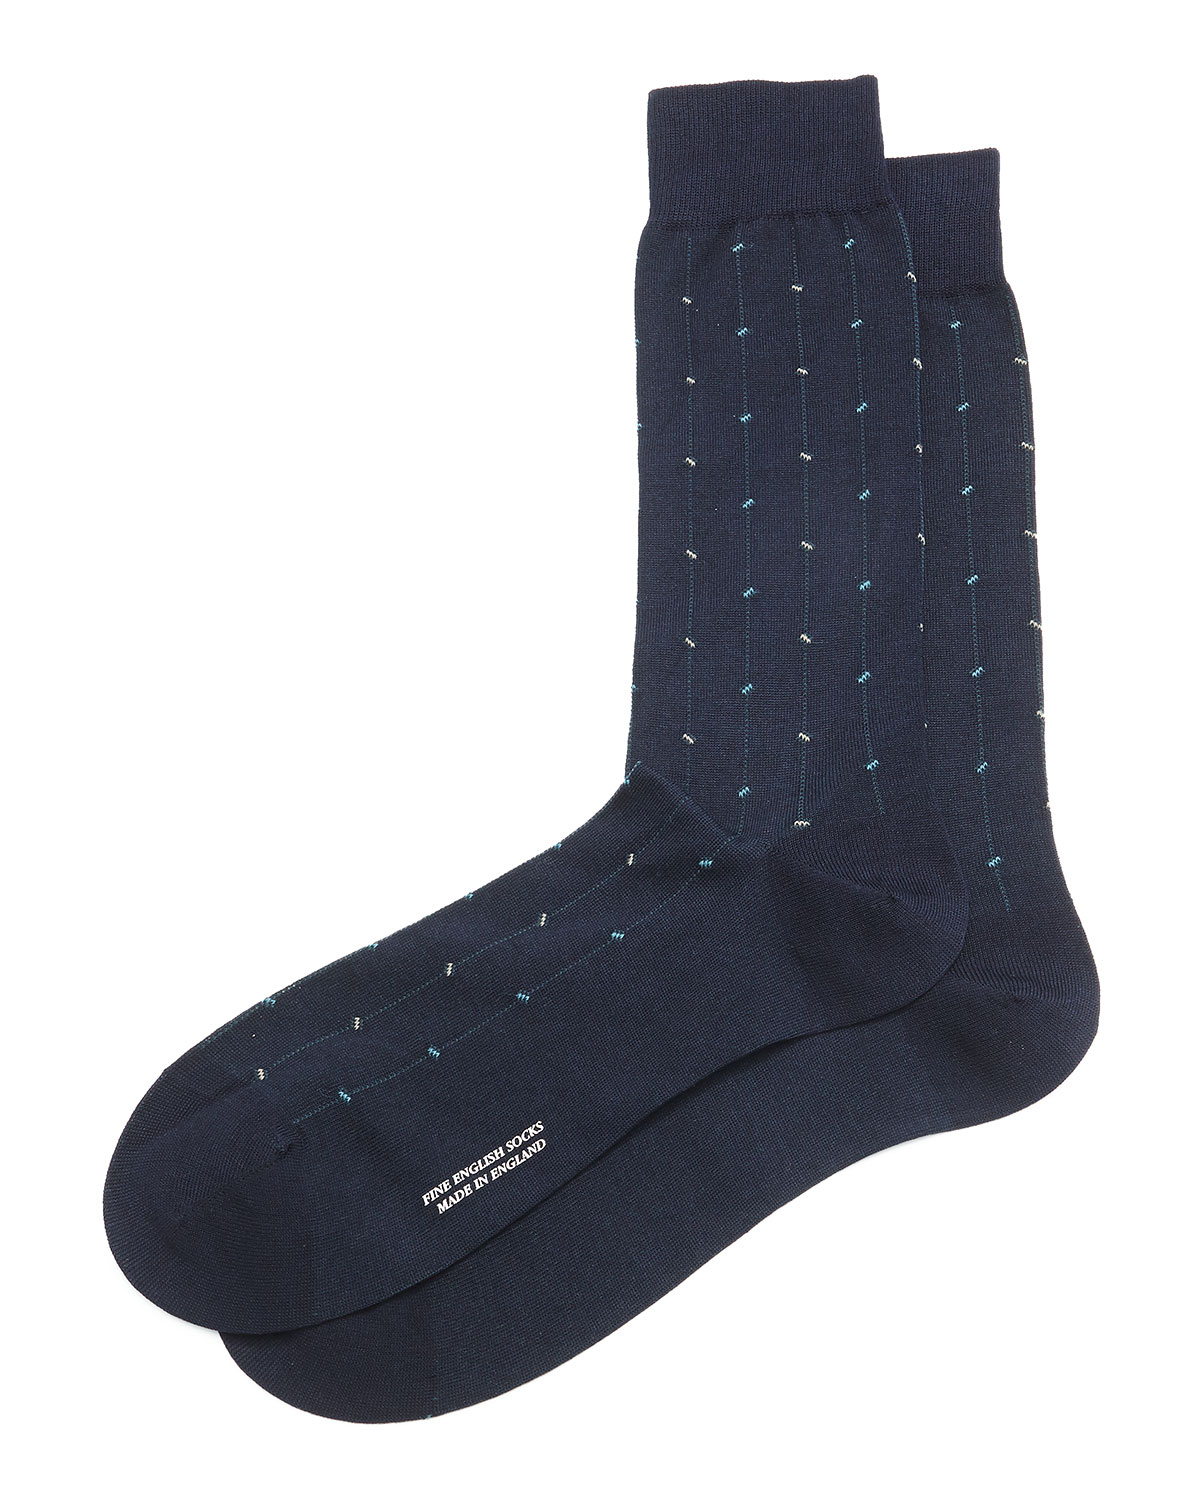 navy blue dress socks